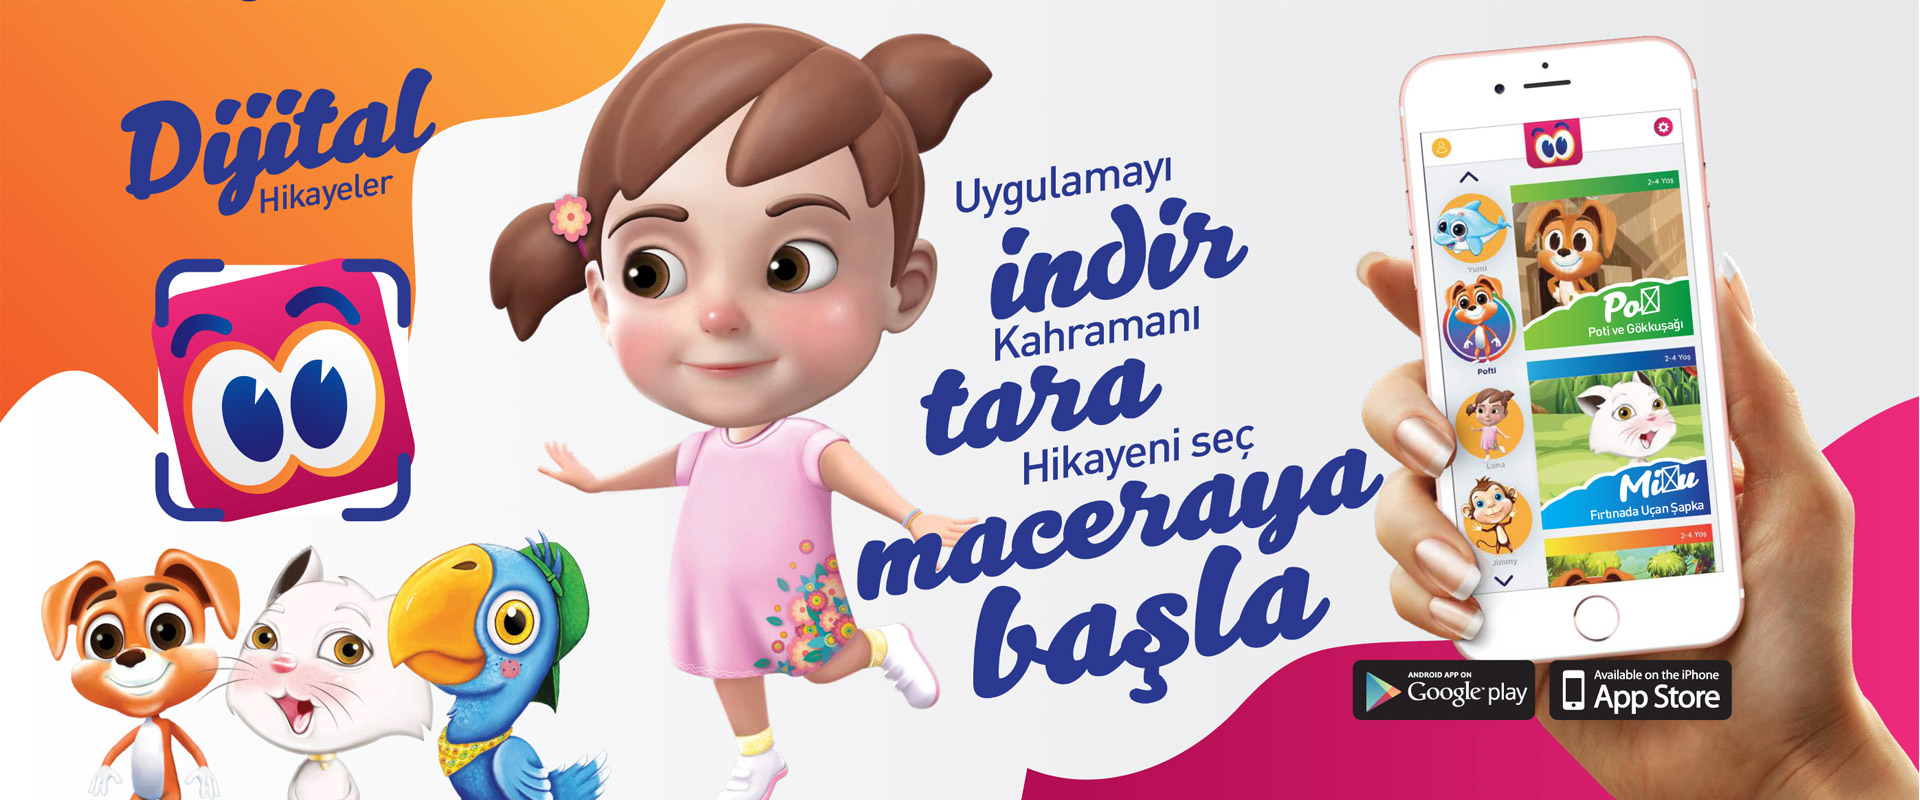 Palyago - KONSEPTIZ Advertising Agency in Turkey